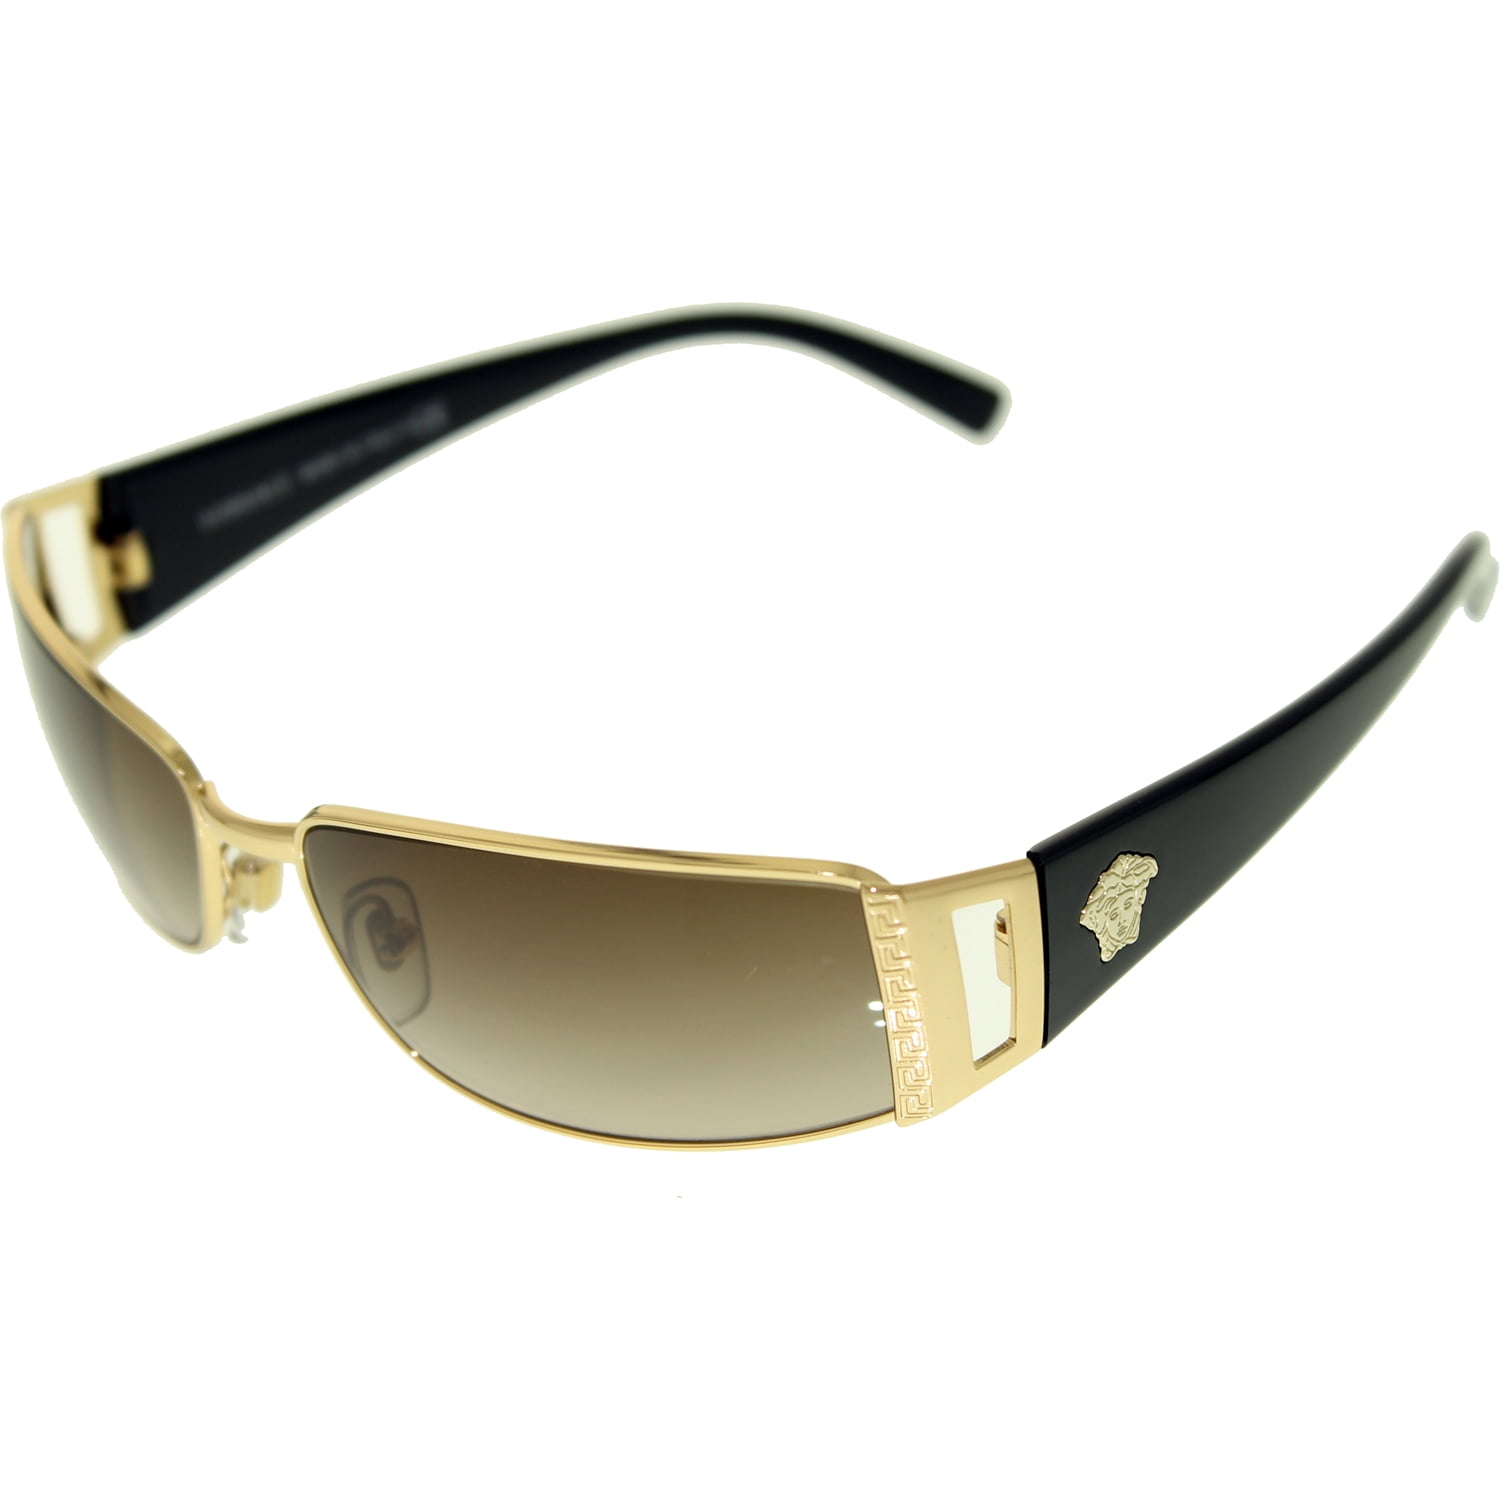 versace rectangle sunglasses